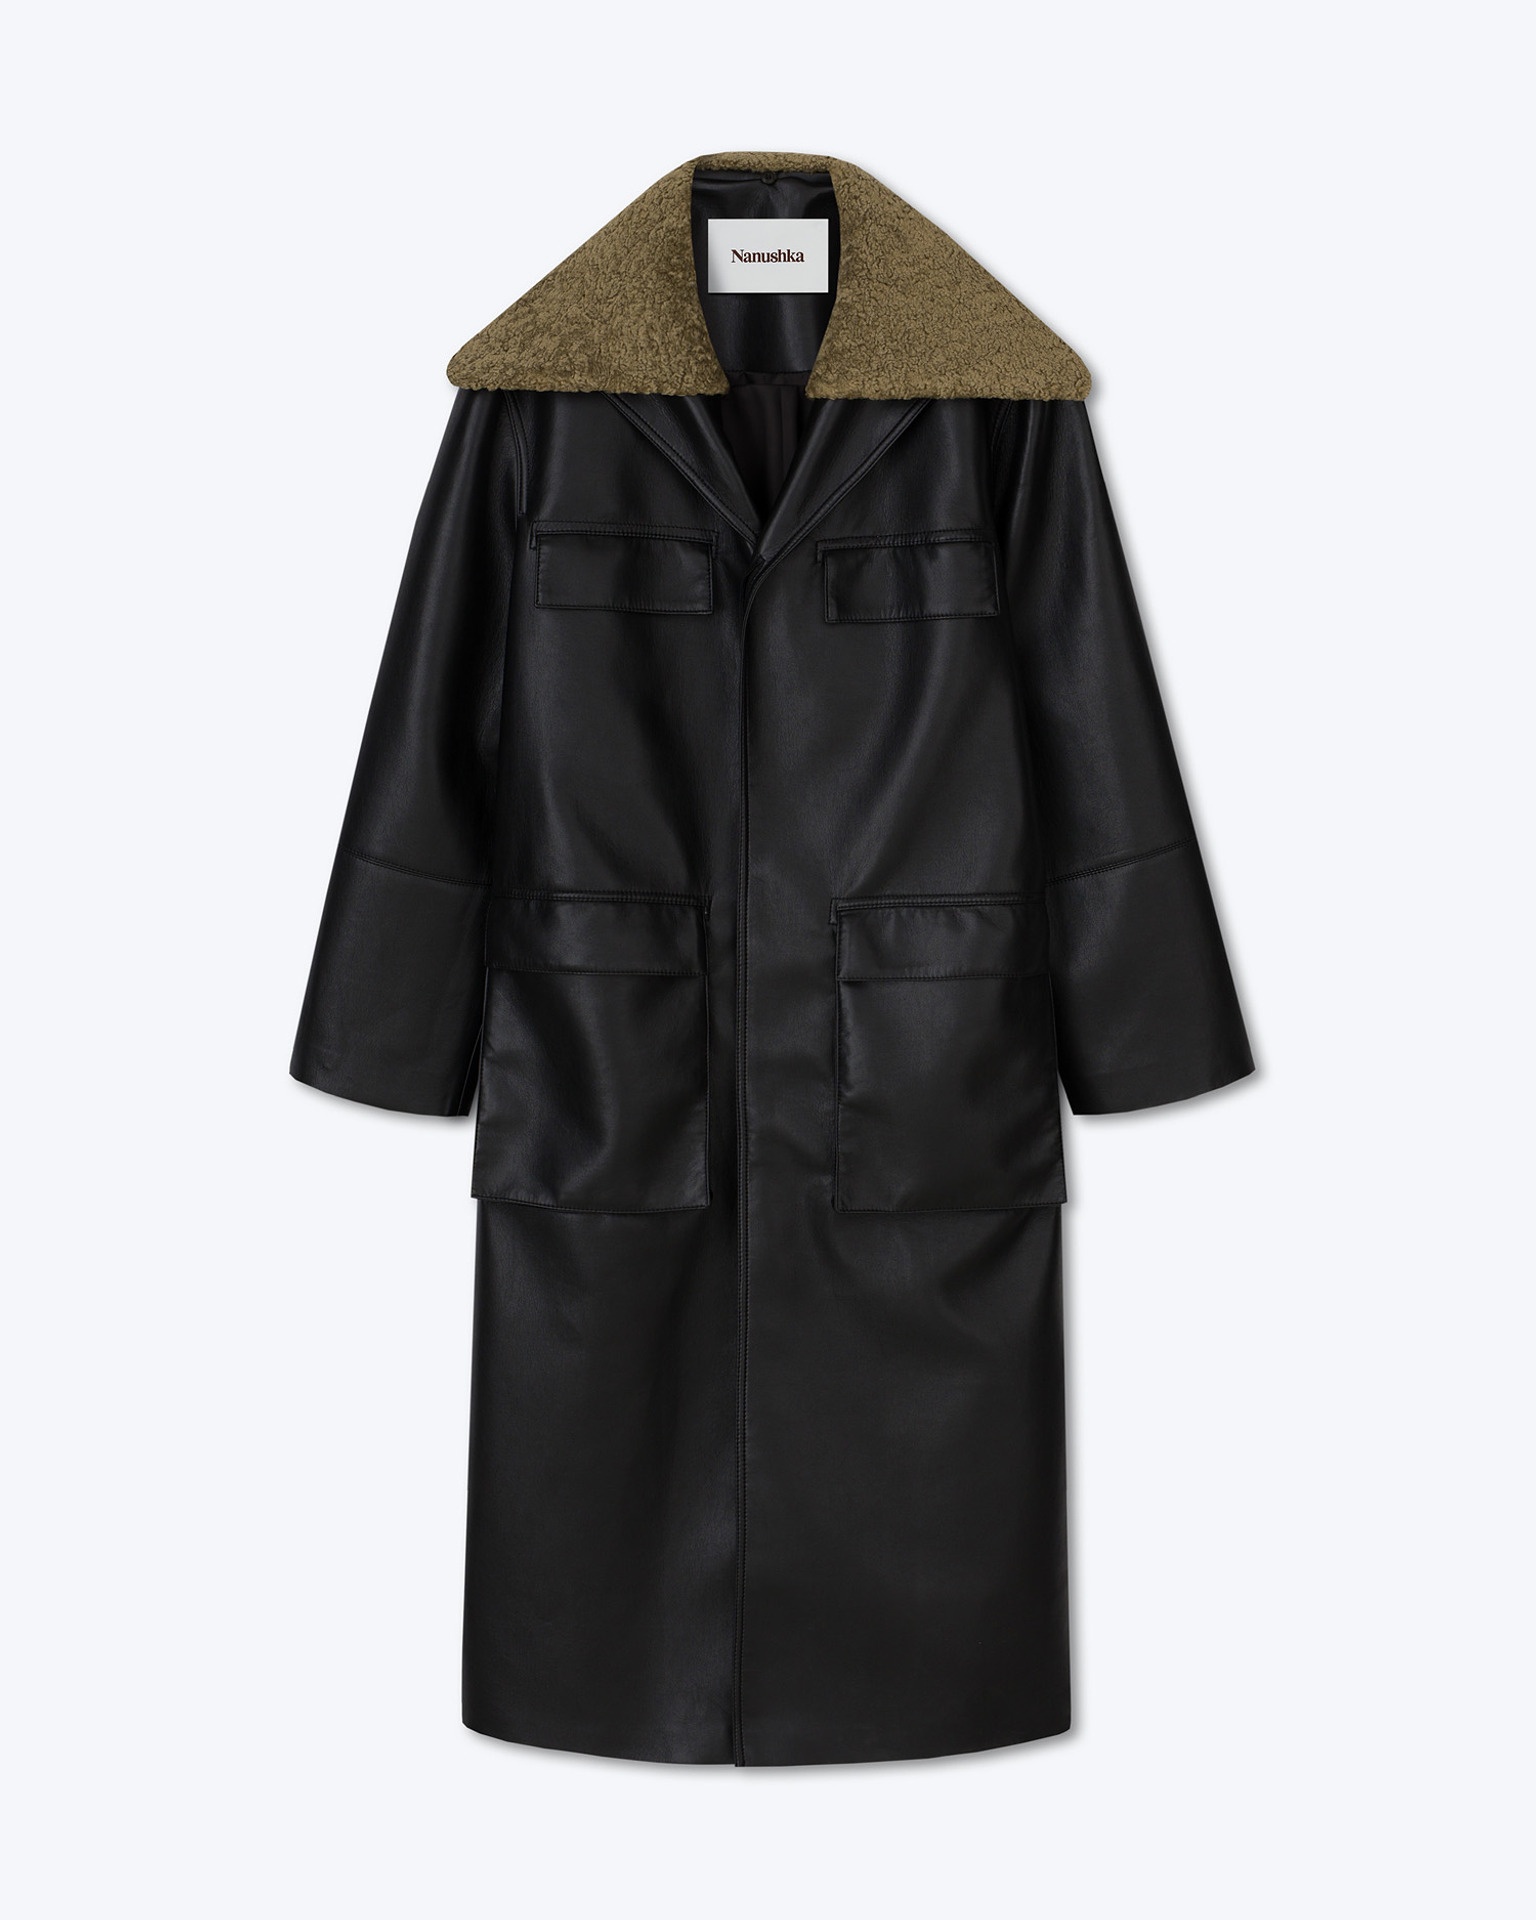 CORVIN - Patch pocket coat - Black/khaki - 1